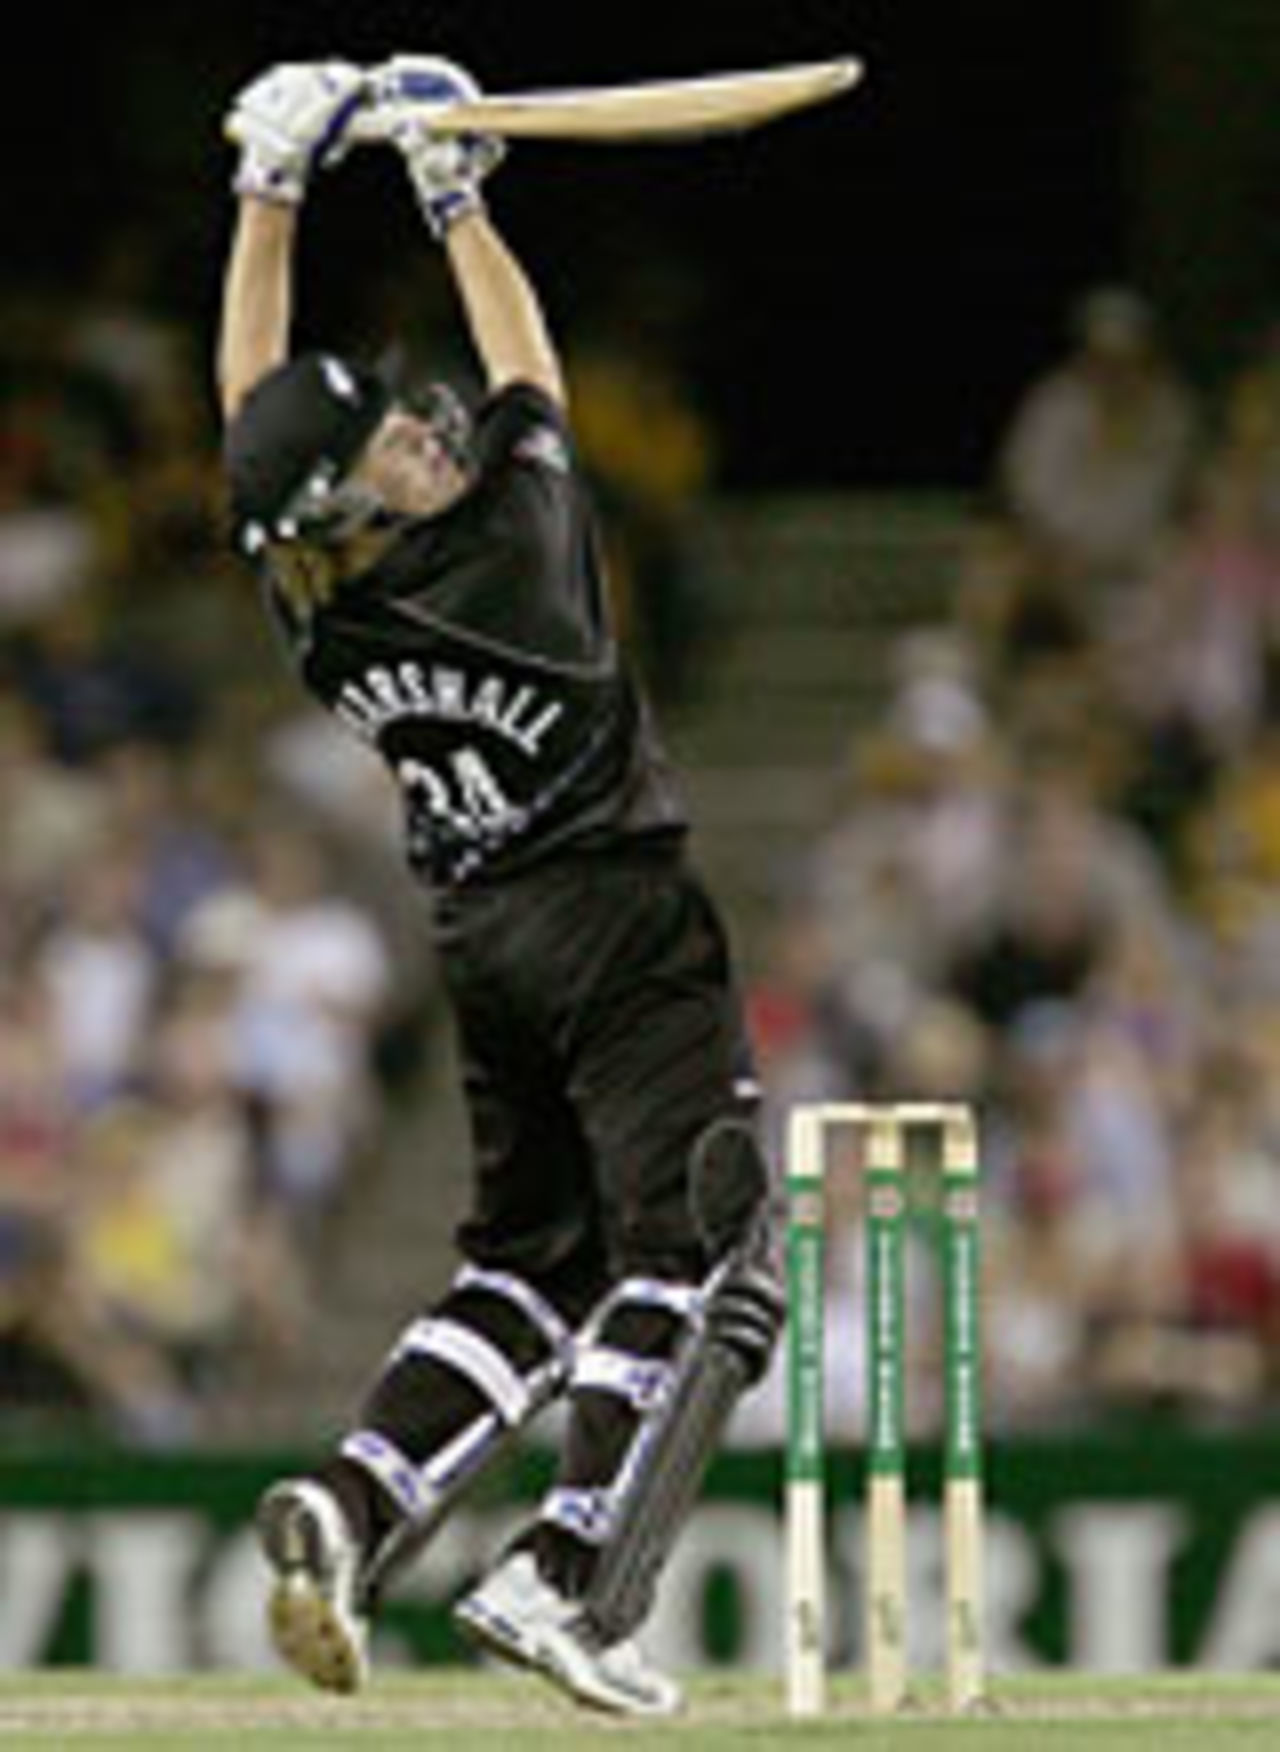 Hamish Marshall improvising, Australia v New Zealand, 1st ODI, Telstra Dome, Melbourne, December 5 2004